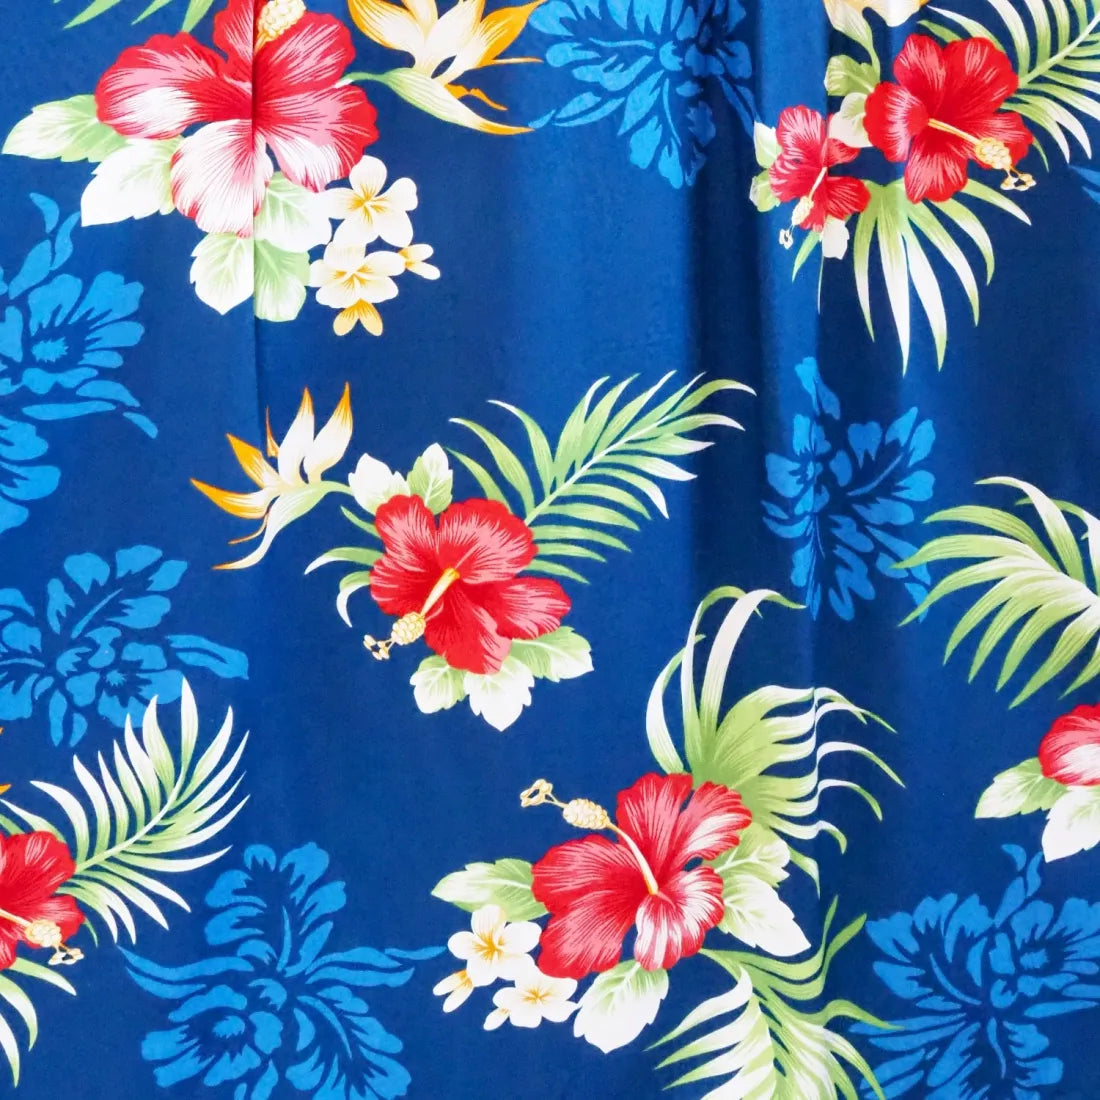 Passion Navy Blue Maxi Hawaiian Dress - Made In Hawaii